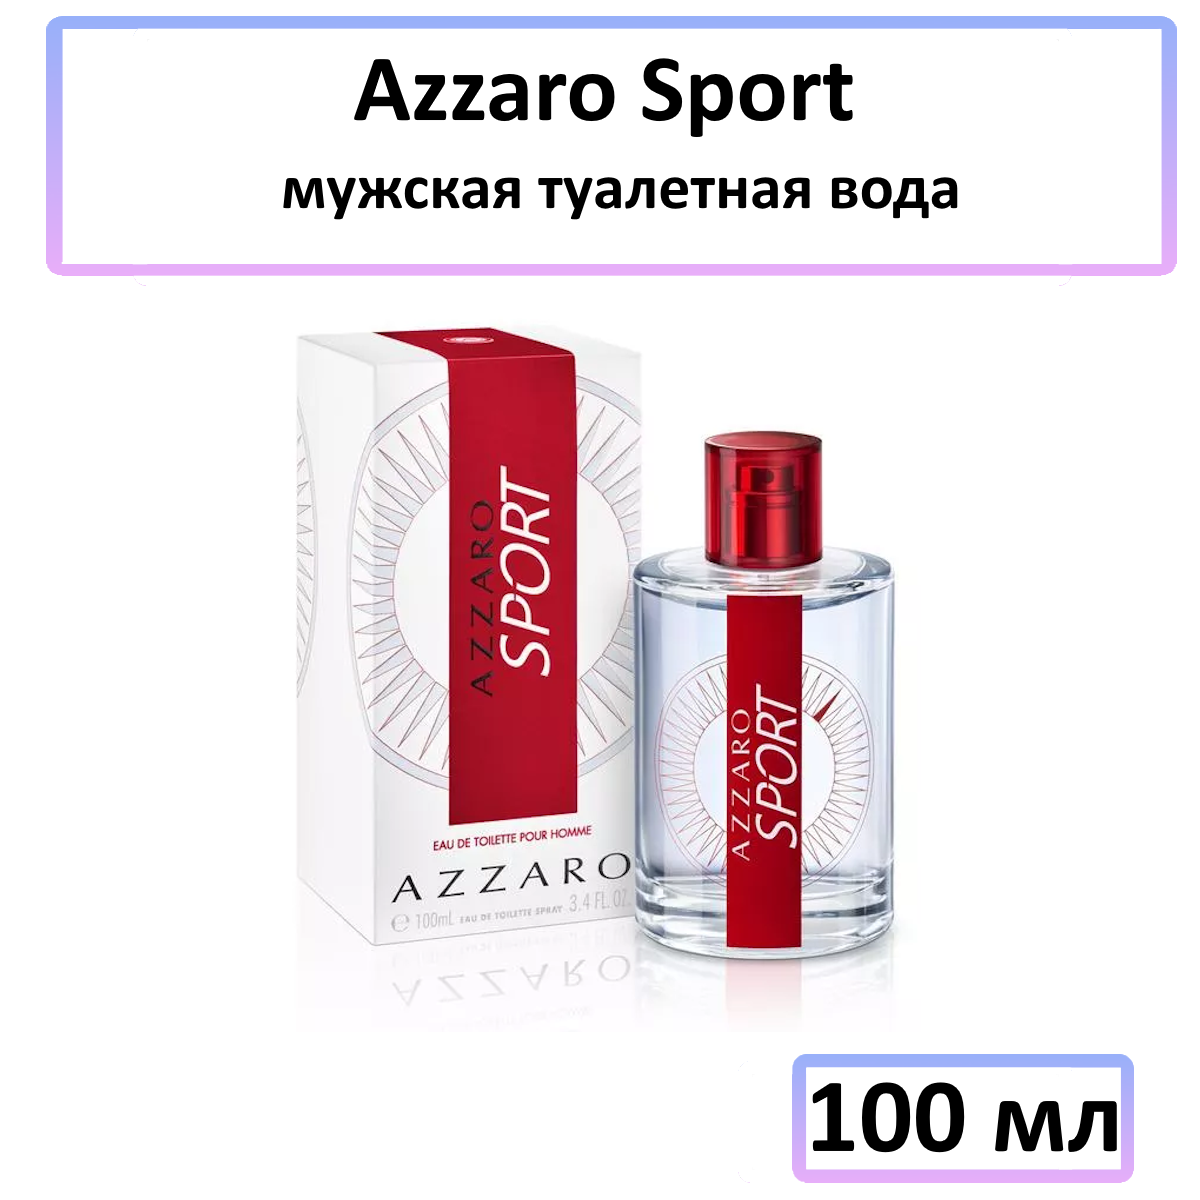 Azzaro Sport - мужская туалетная вода, 100 мл